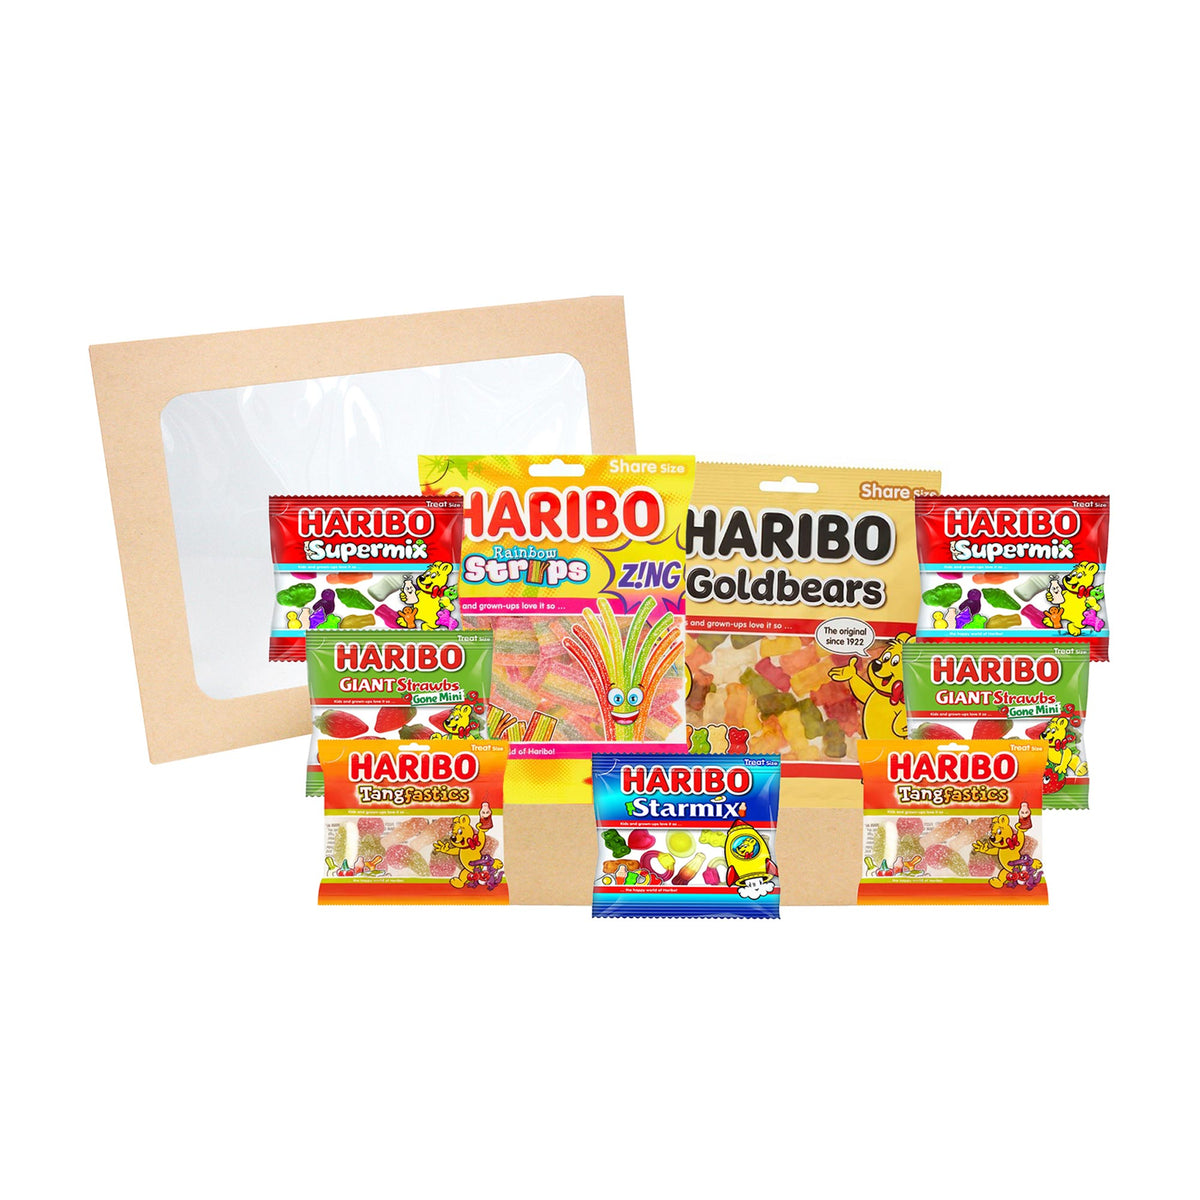 Haribo Bonanza: The Ultimate Candy Gift Hamper